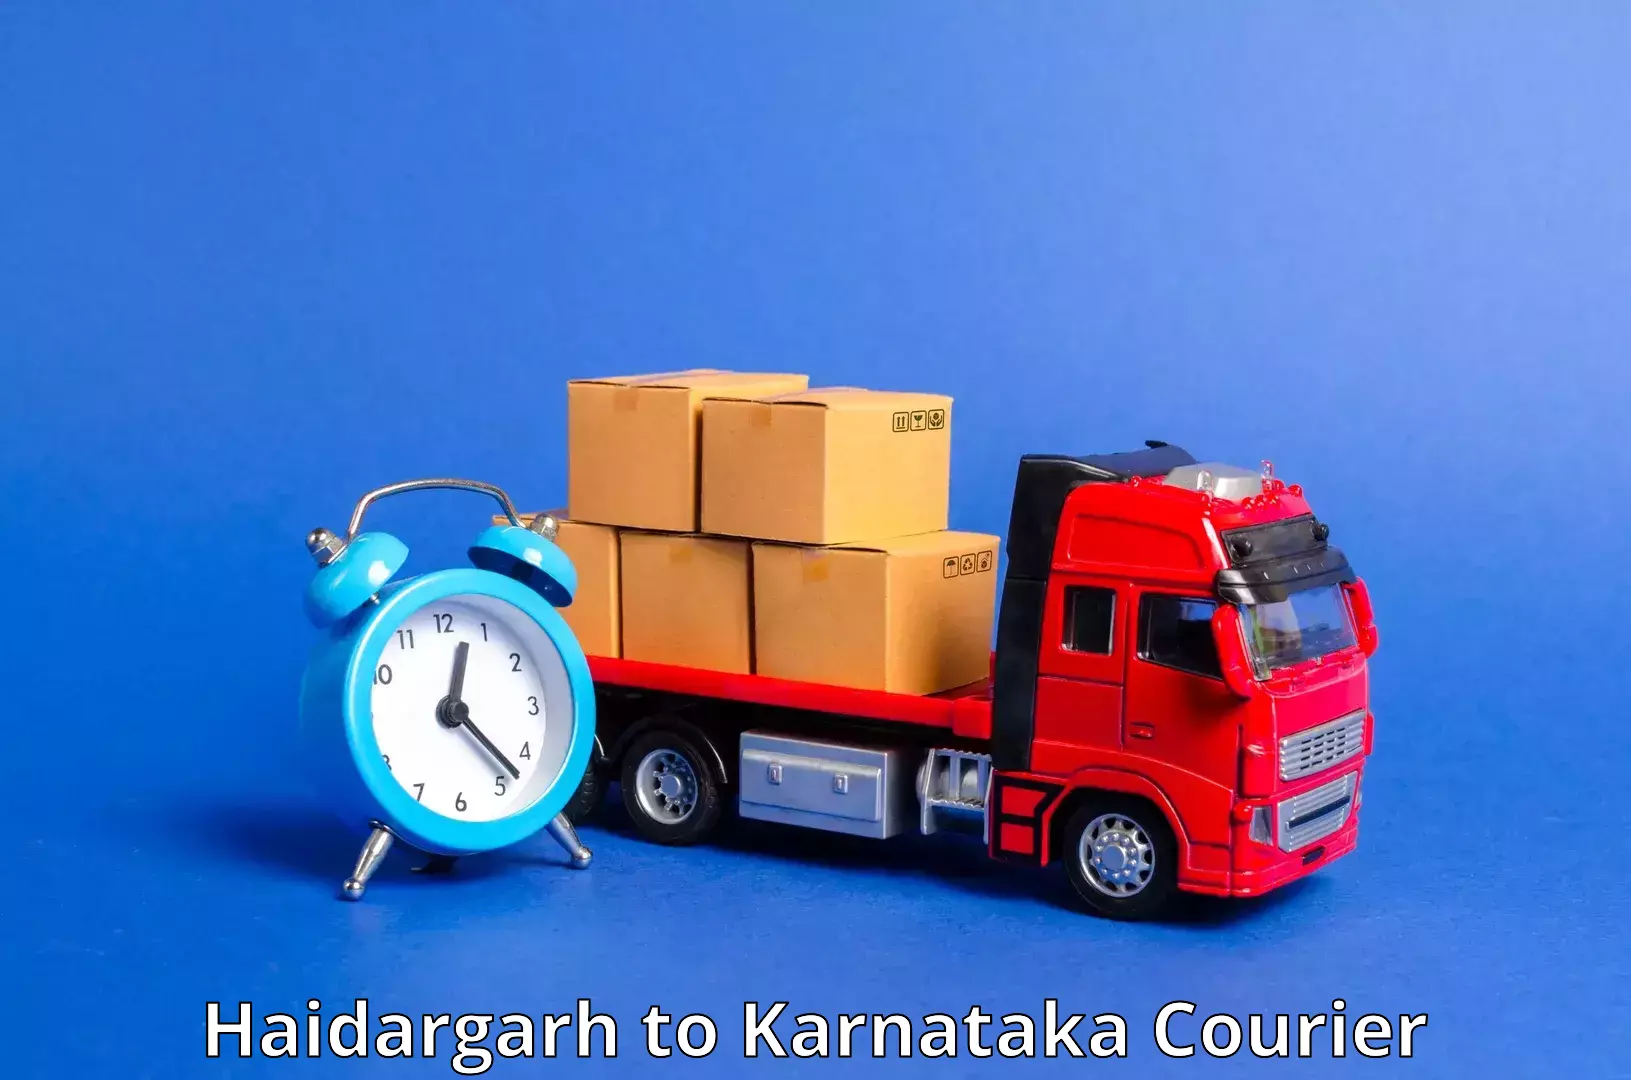 Tech-enabled shipping Haidargarh to Tarikere